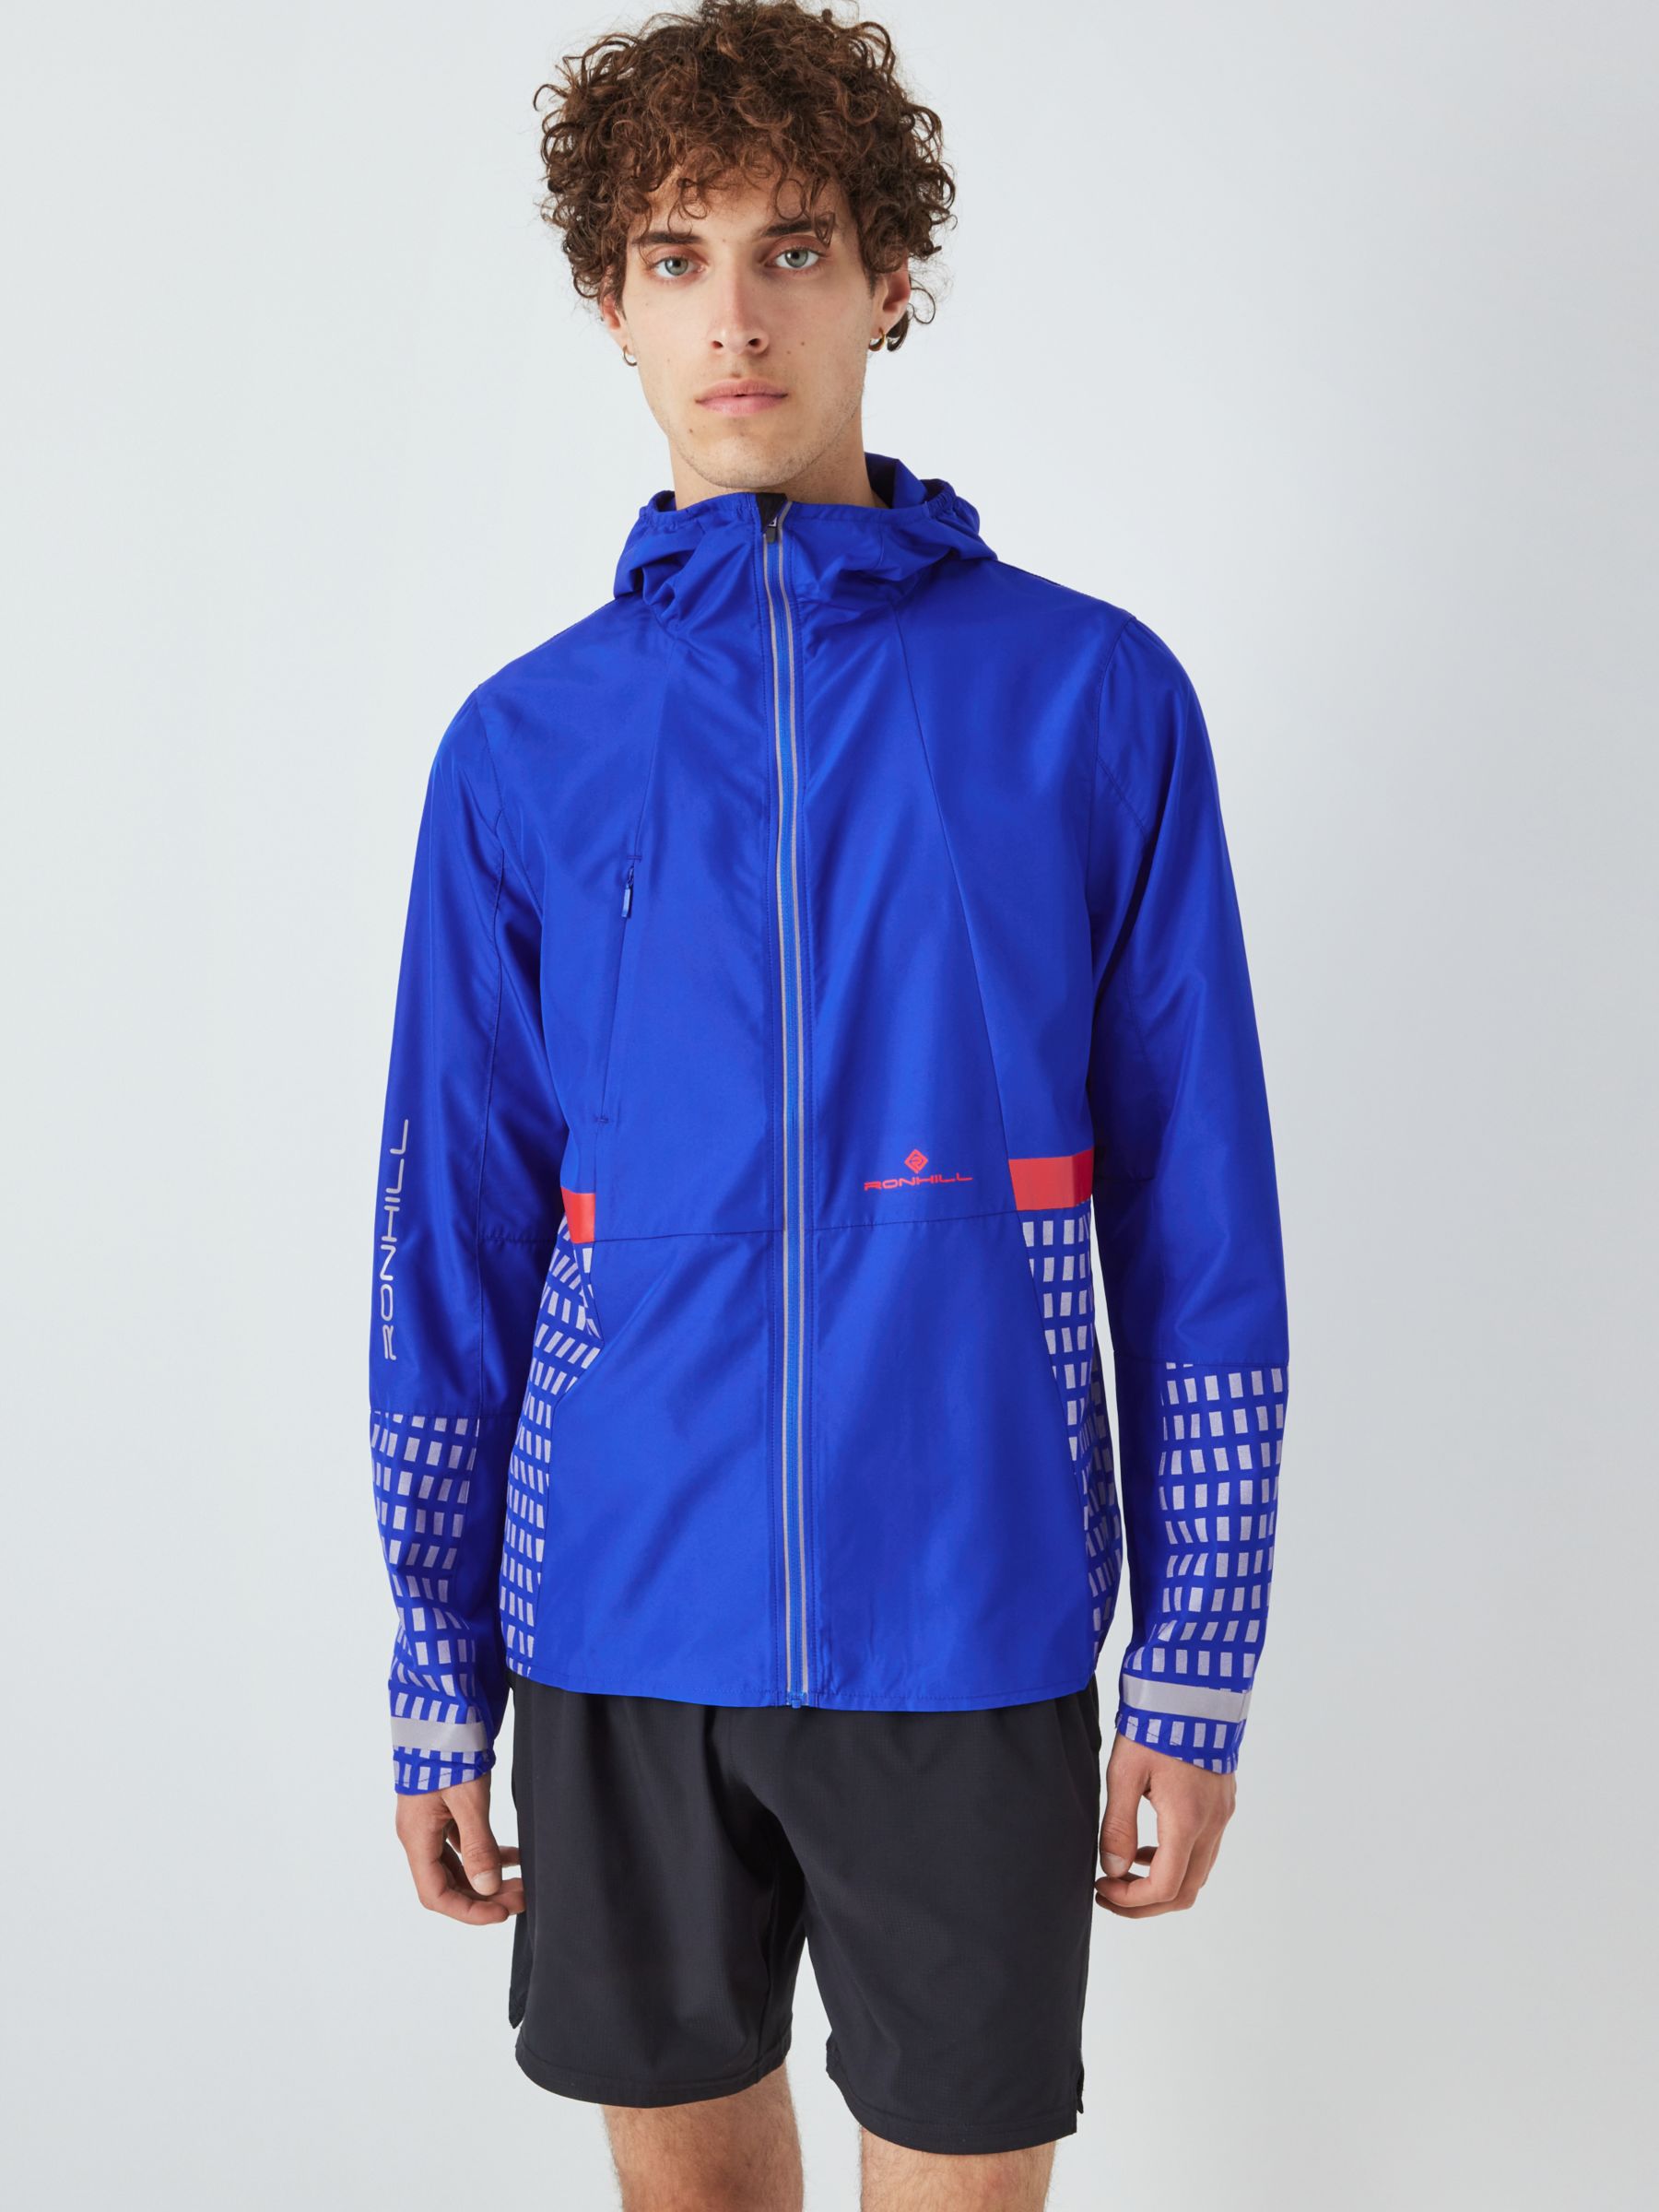 Ronhill Men's Reflective Running Jacket, Cobalt, L